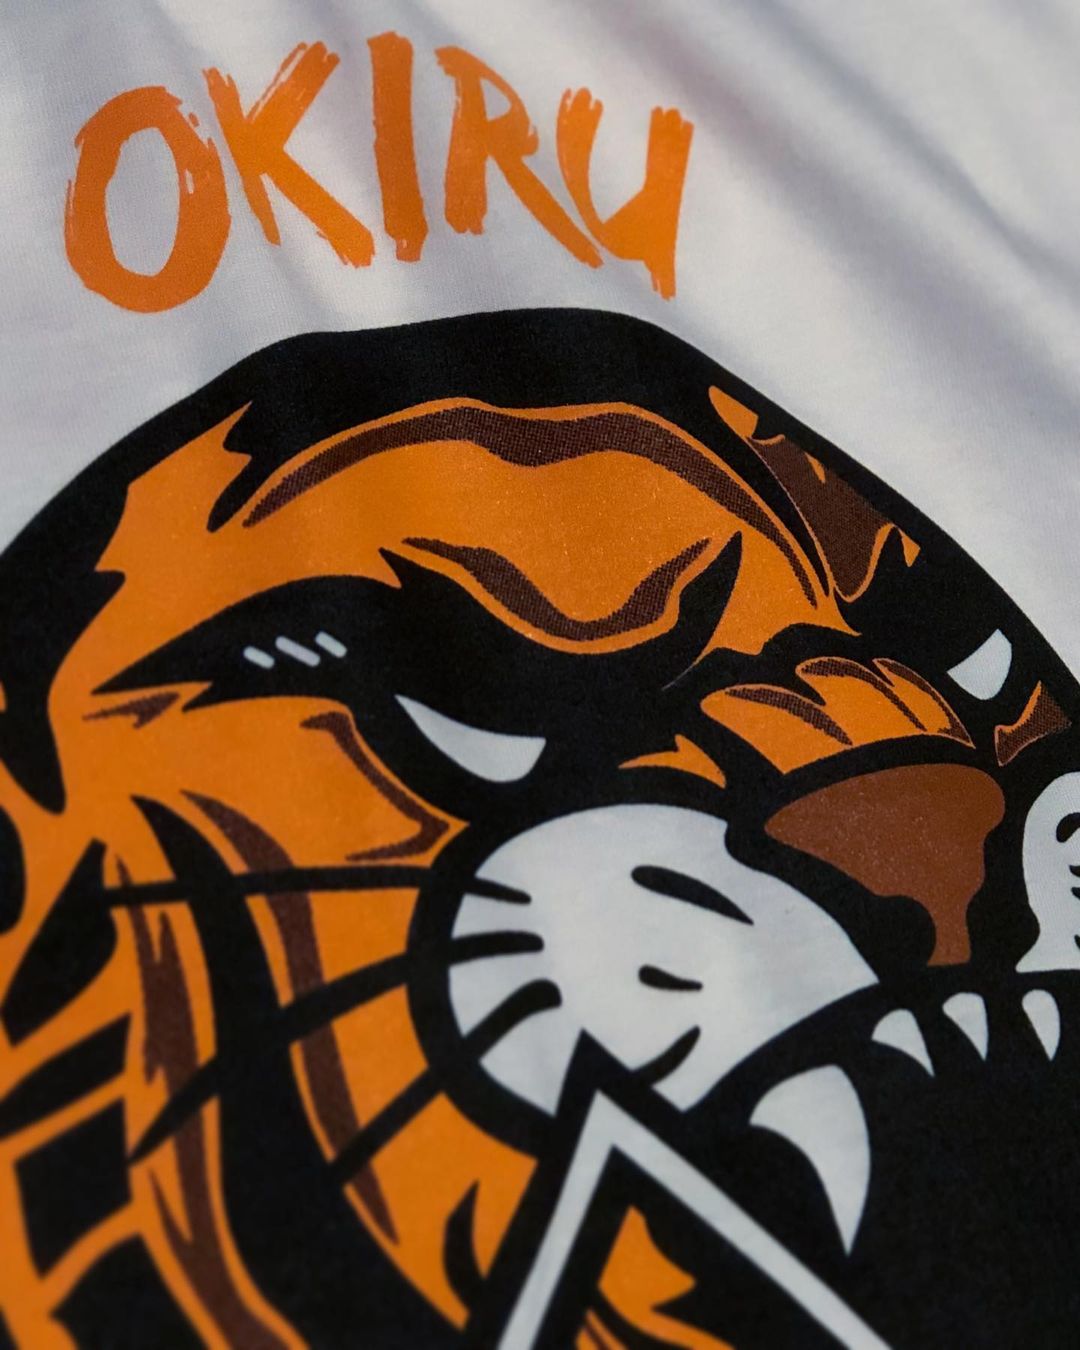 The Tiger Tee White - OKIRU T-shirt Unisex